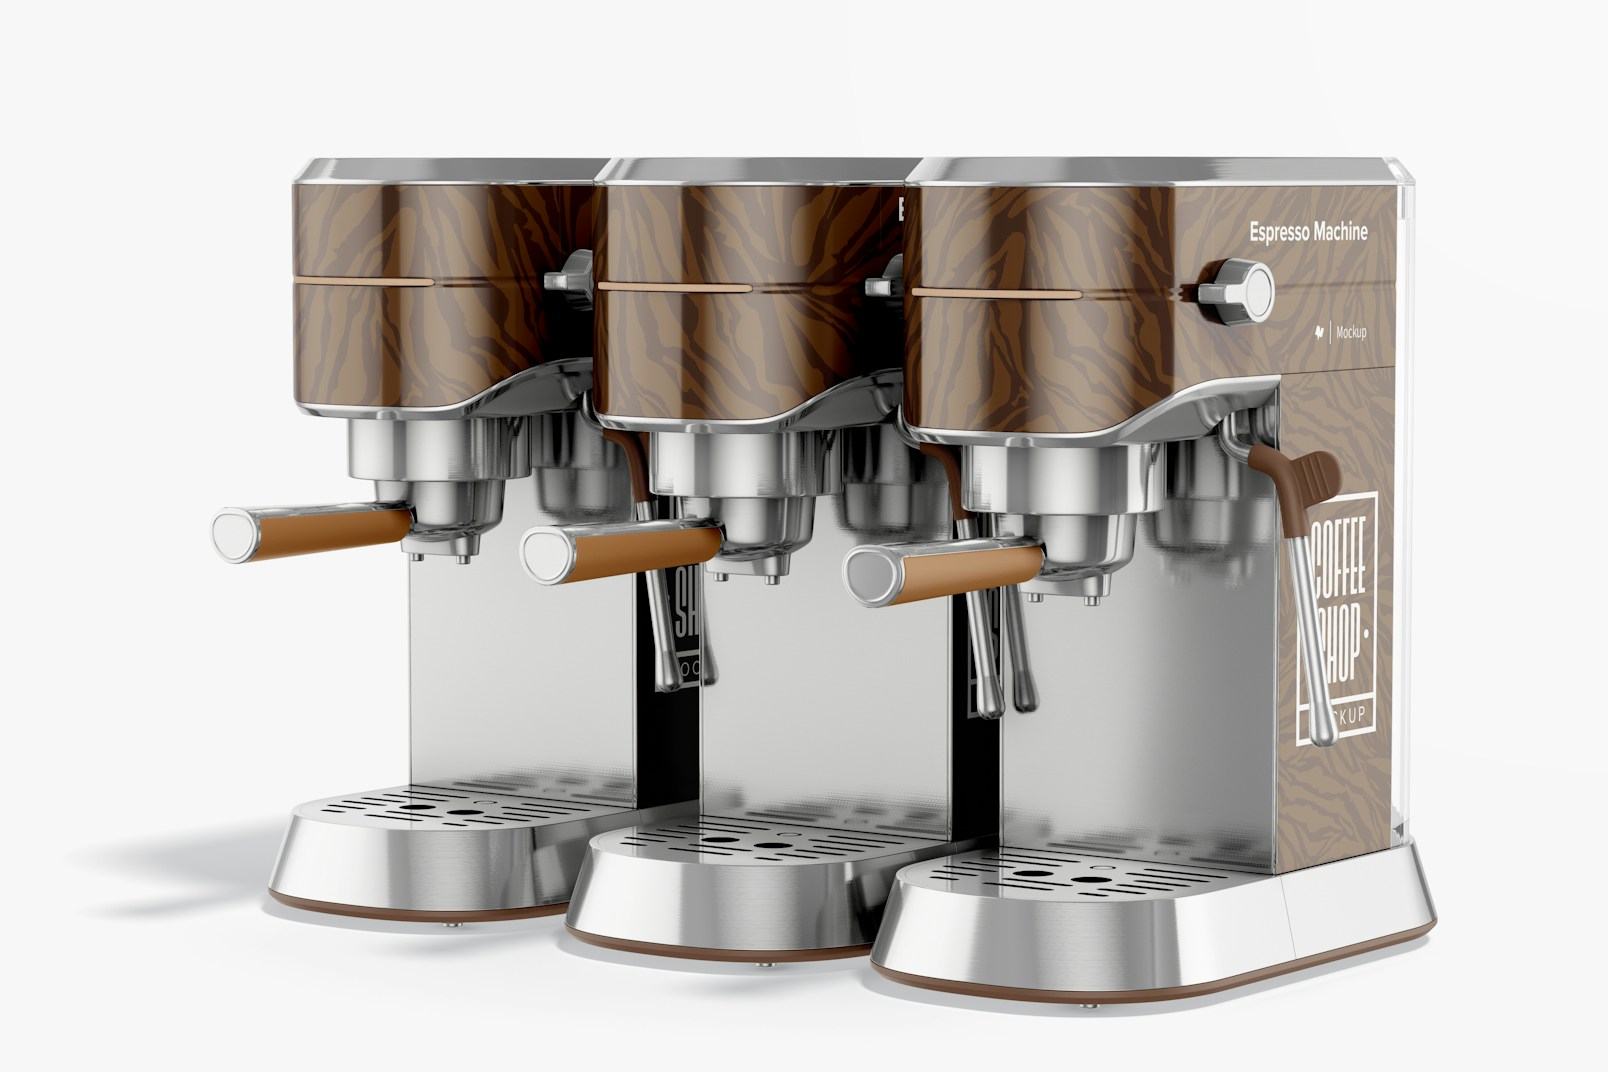 Espresso Machines Mockup